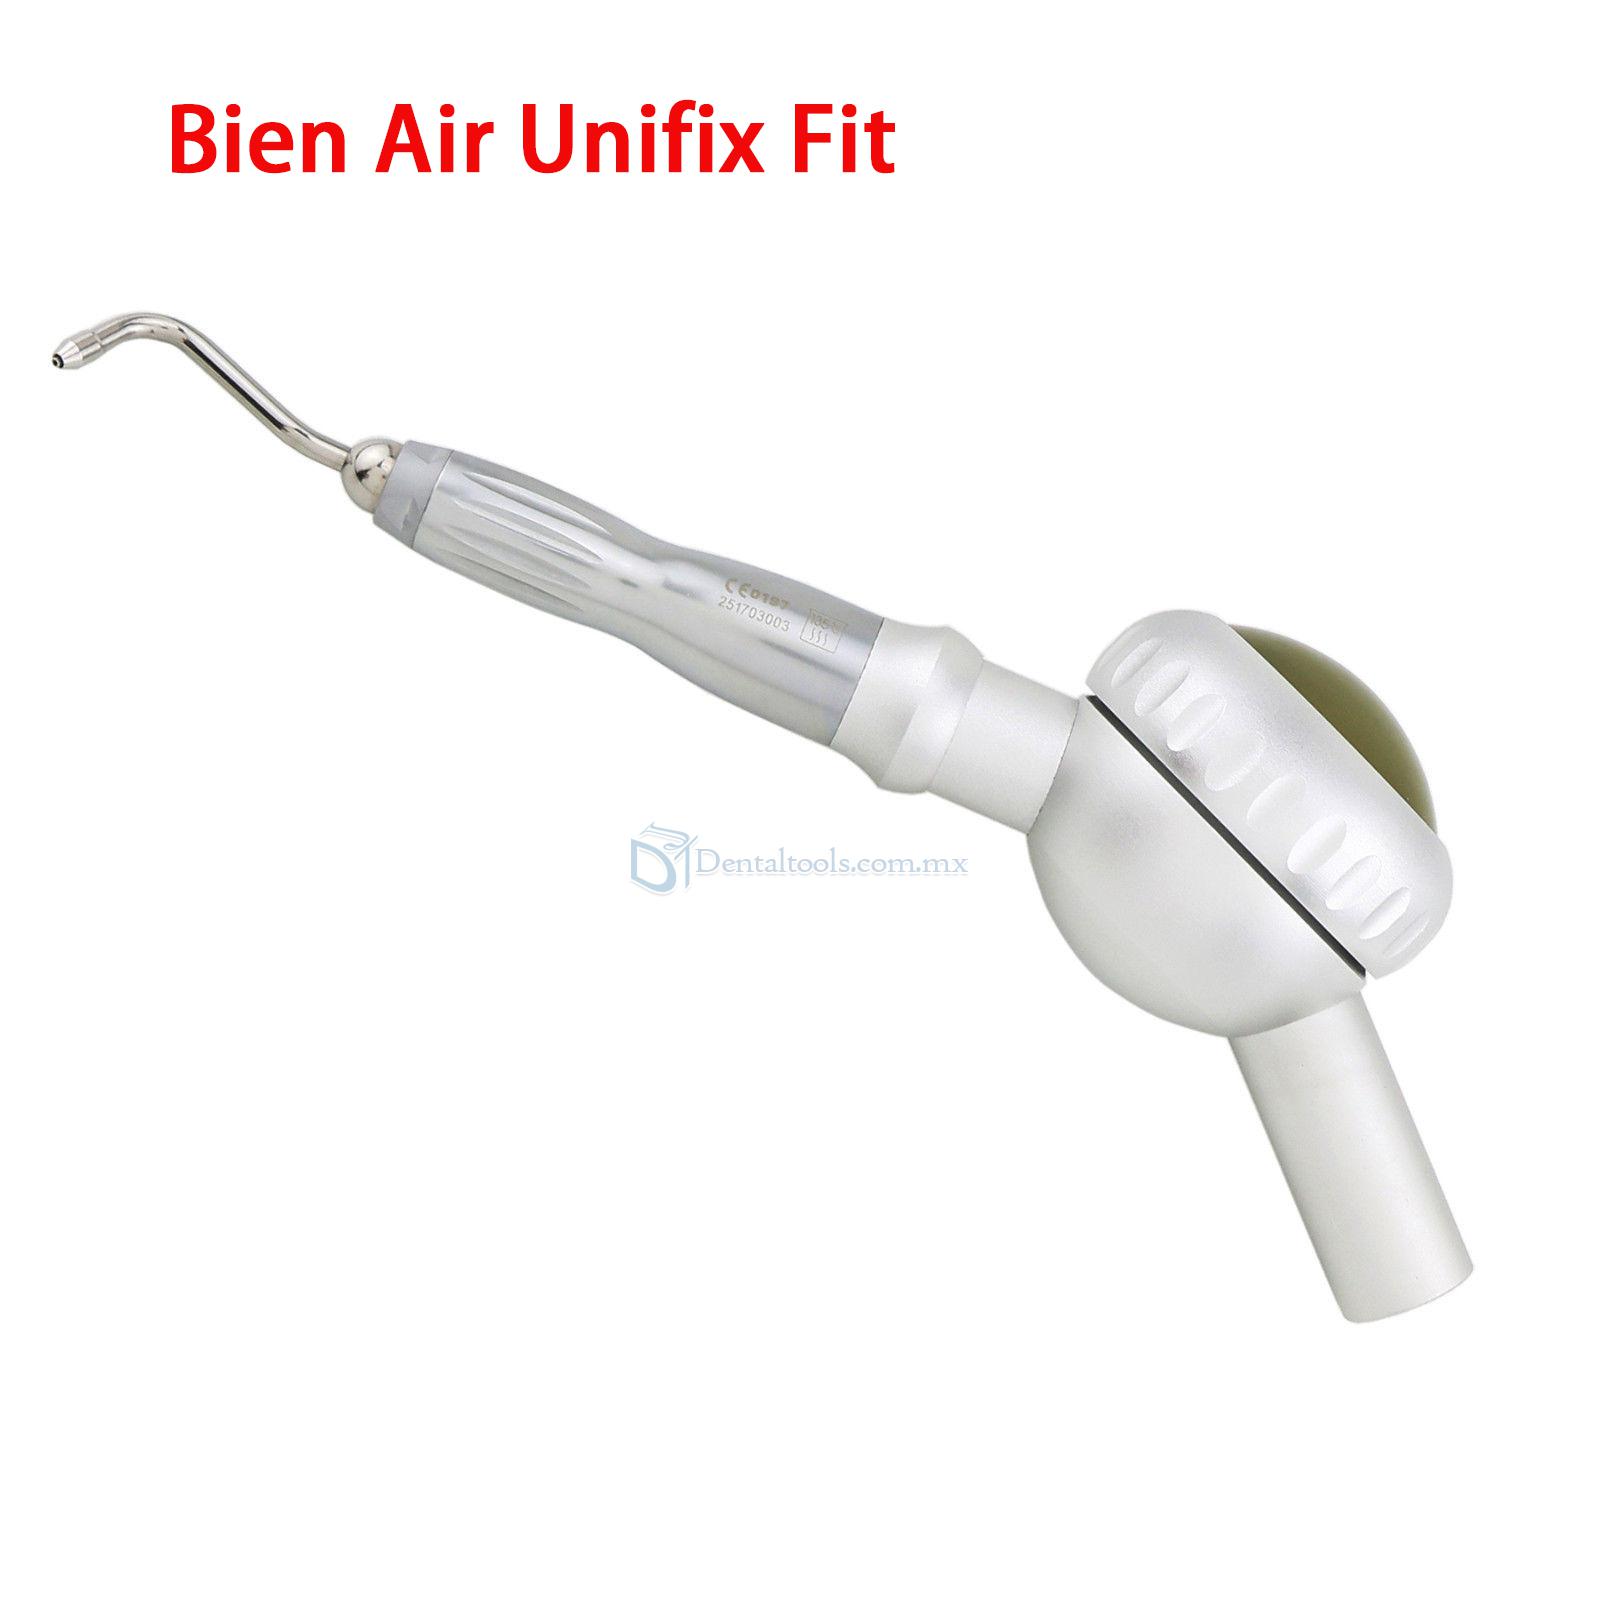 Baiyun Aeropulidor Dental Bien Air Unifix Compatible